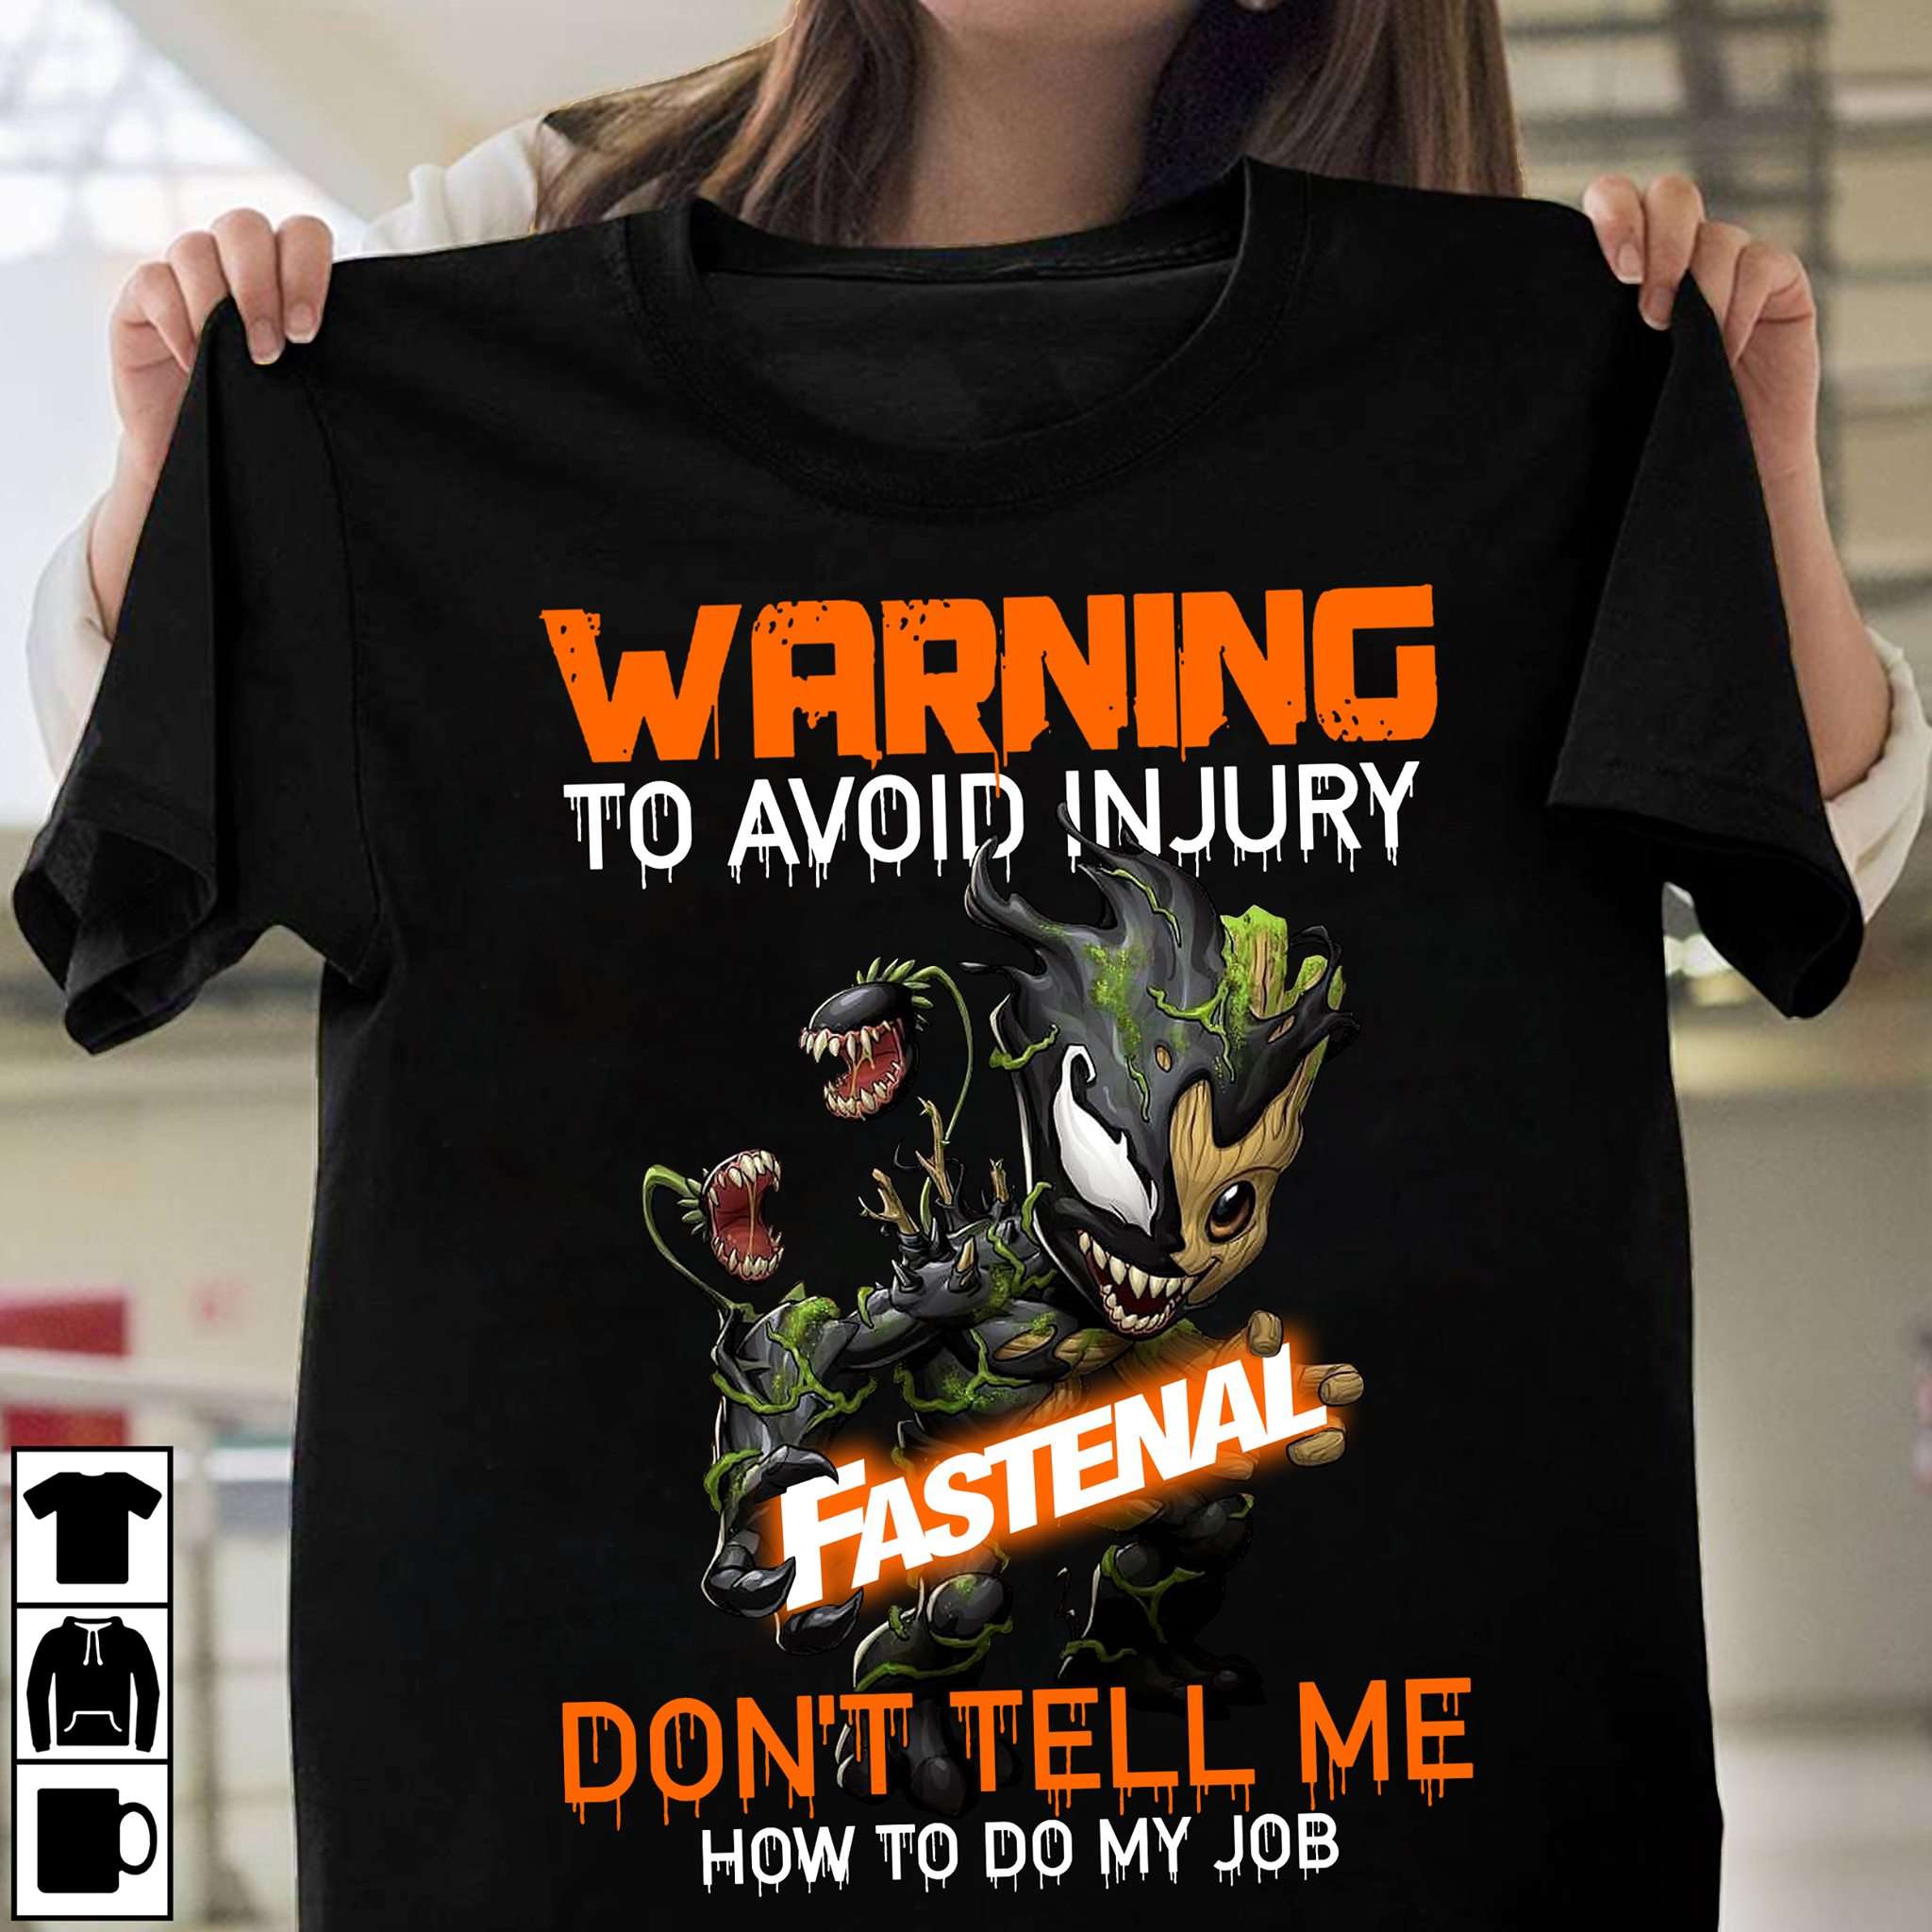 Warning to avoid injury fastenal - Baby groot, Venom groot version